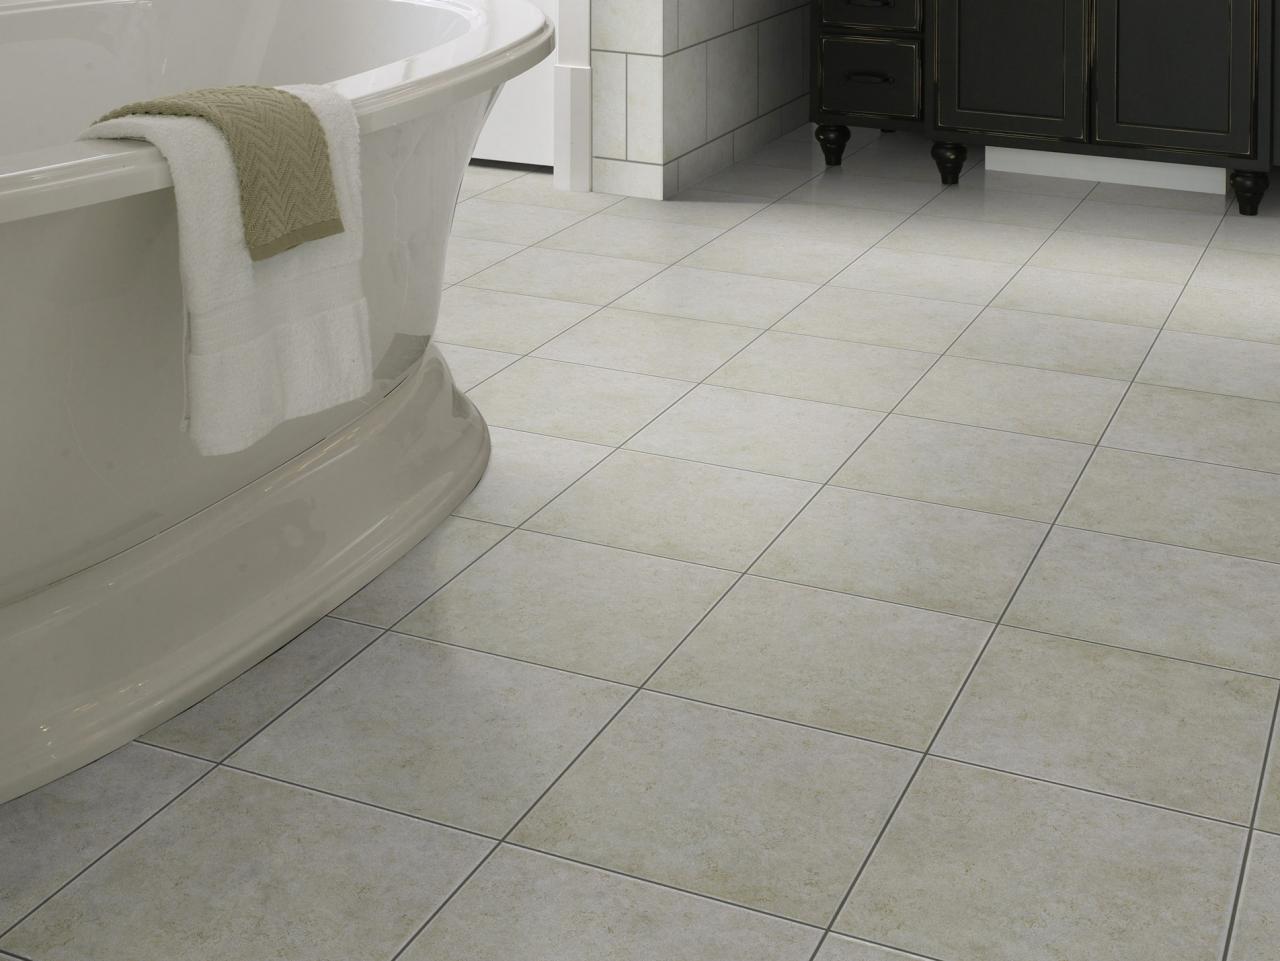 Why Homeowners Love Ceramic Tile, Images Of Bathroom Floor Tiles